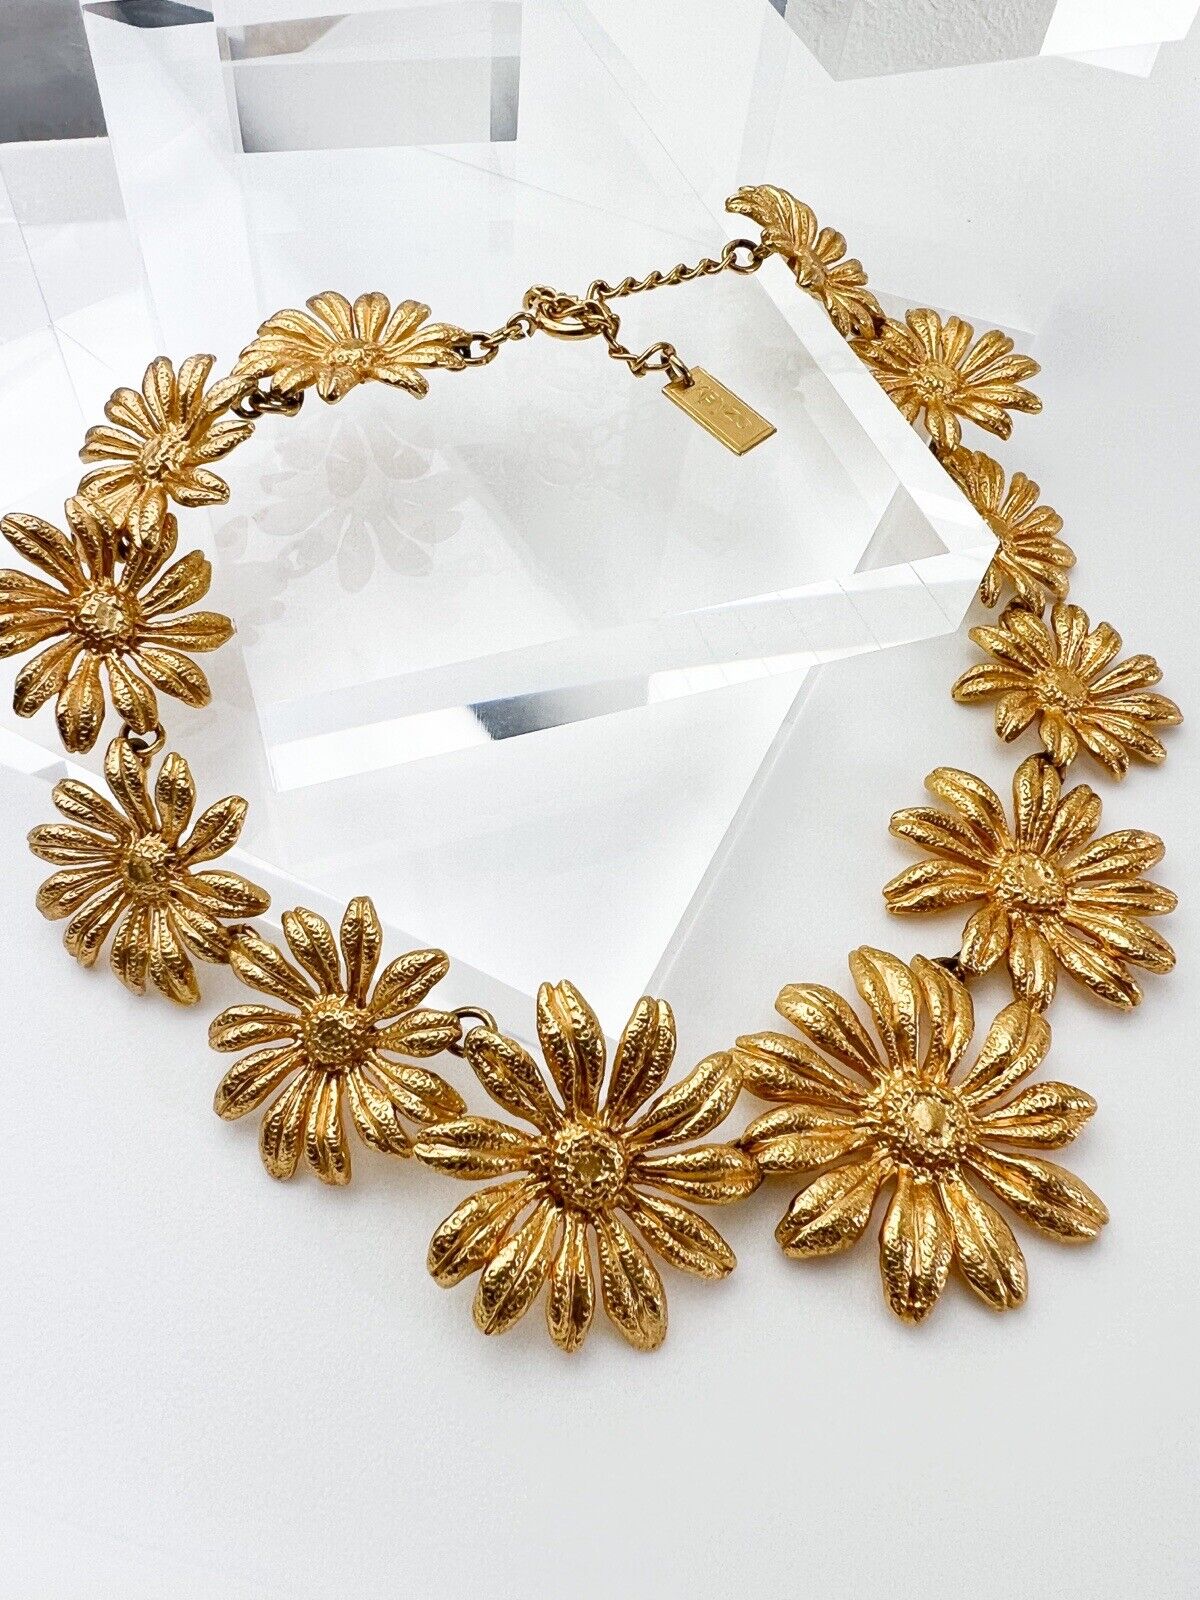 KENZO Vintage Charm Necklace Floral Gold Choker